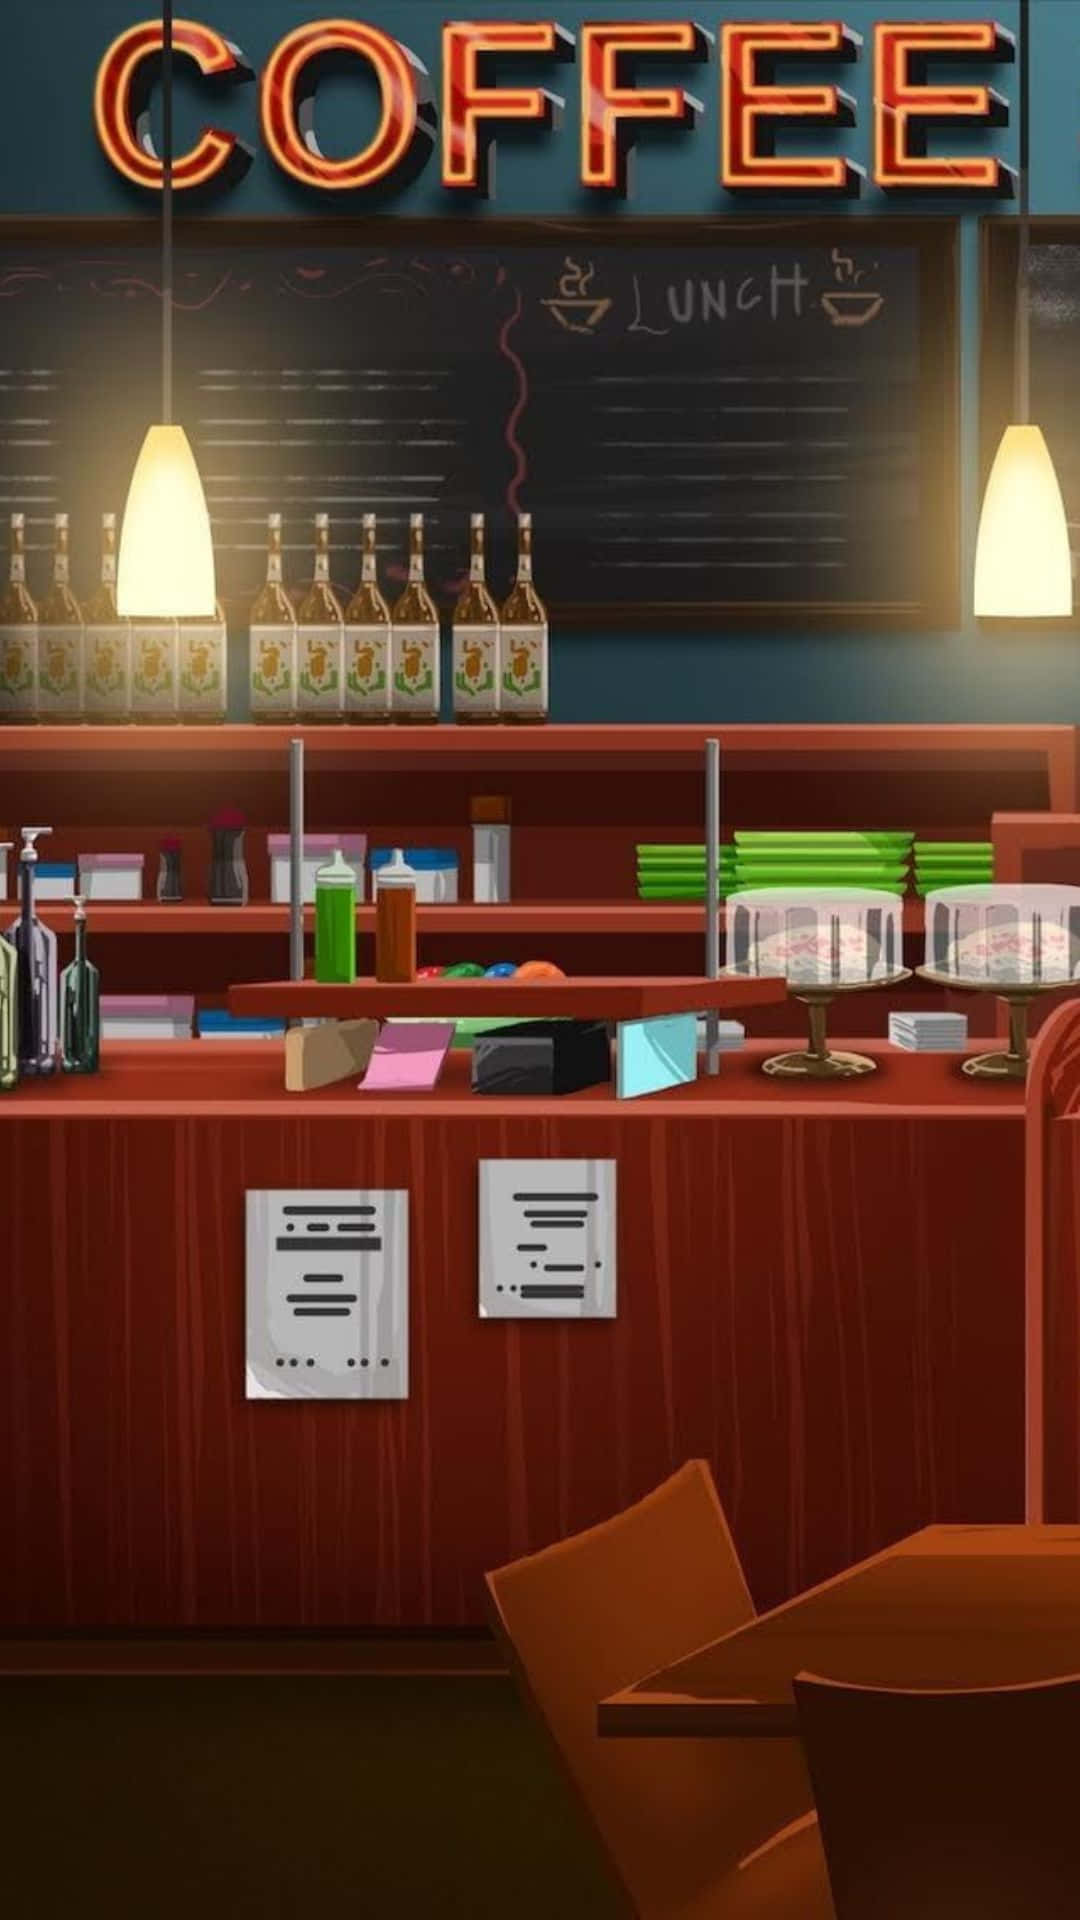 Chozen Coffee Shop Background by katstocktondeviantartcom on deviantART   Coffee shop Home decor Anime coffee